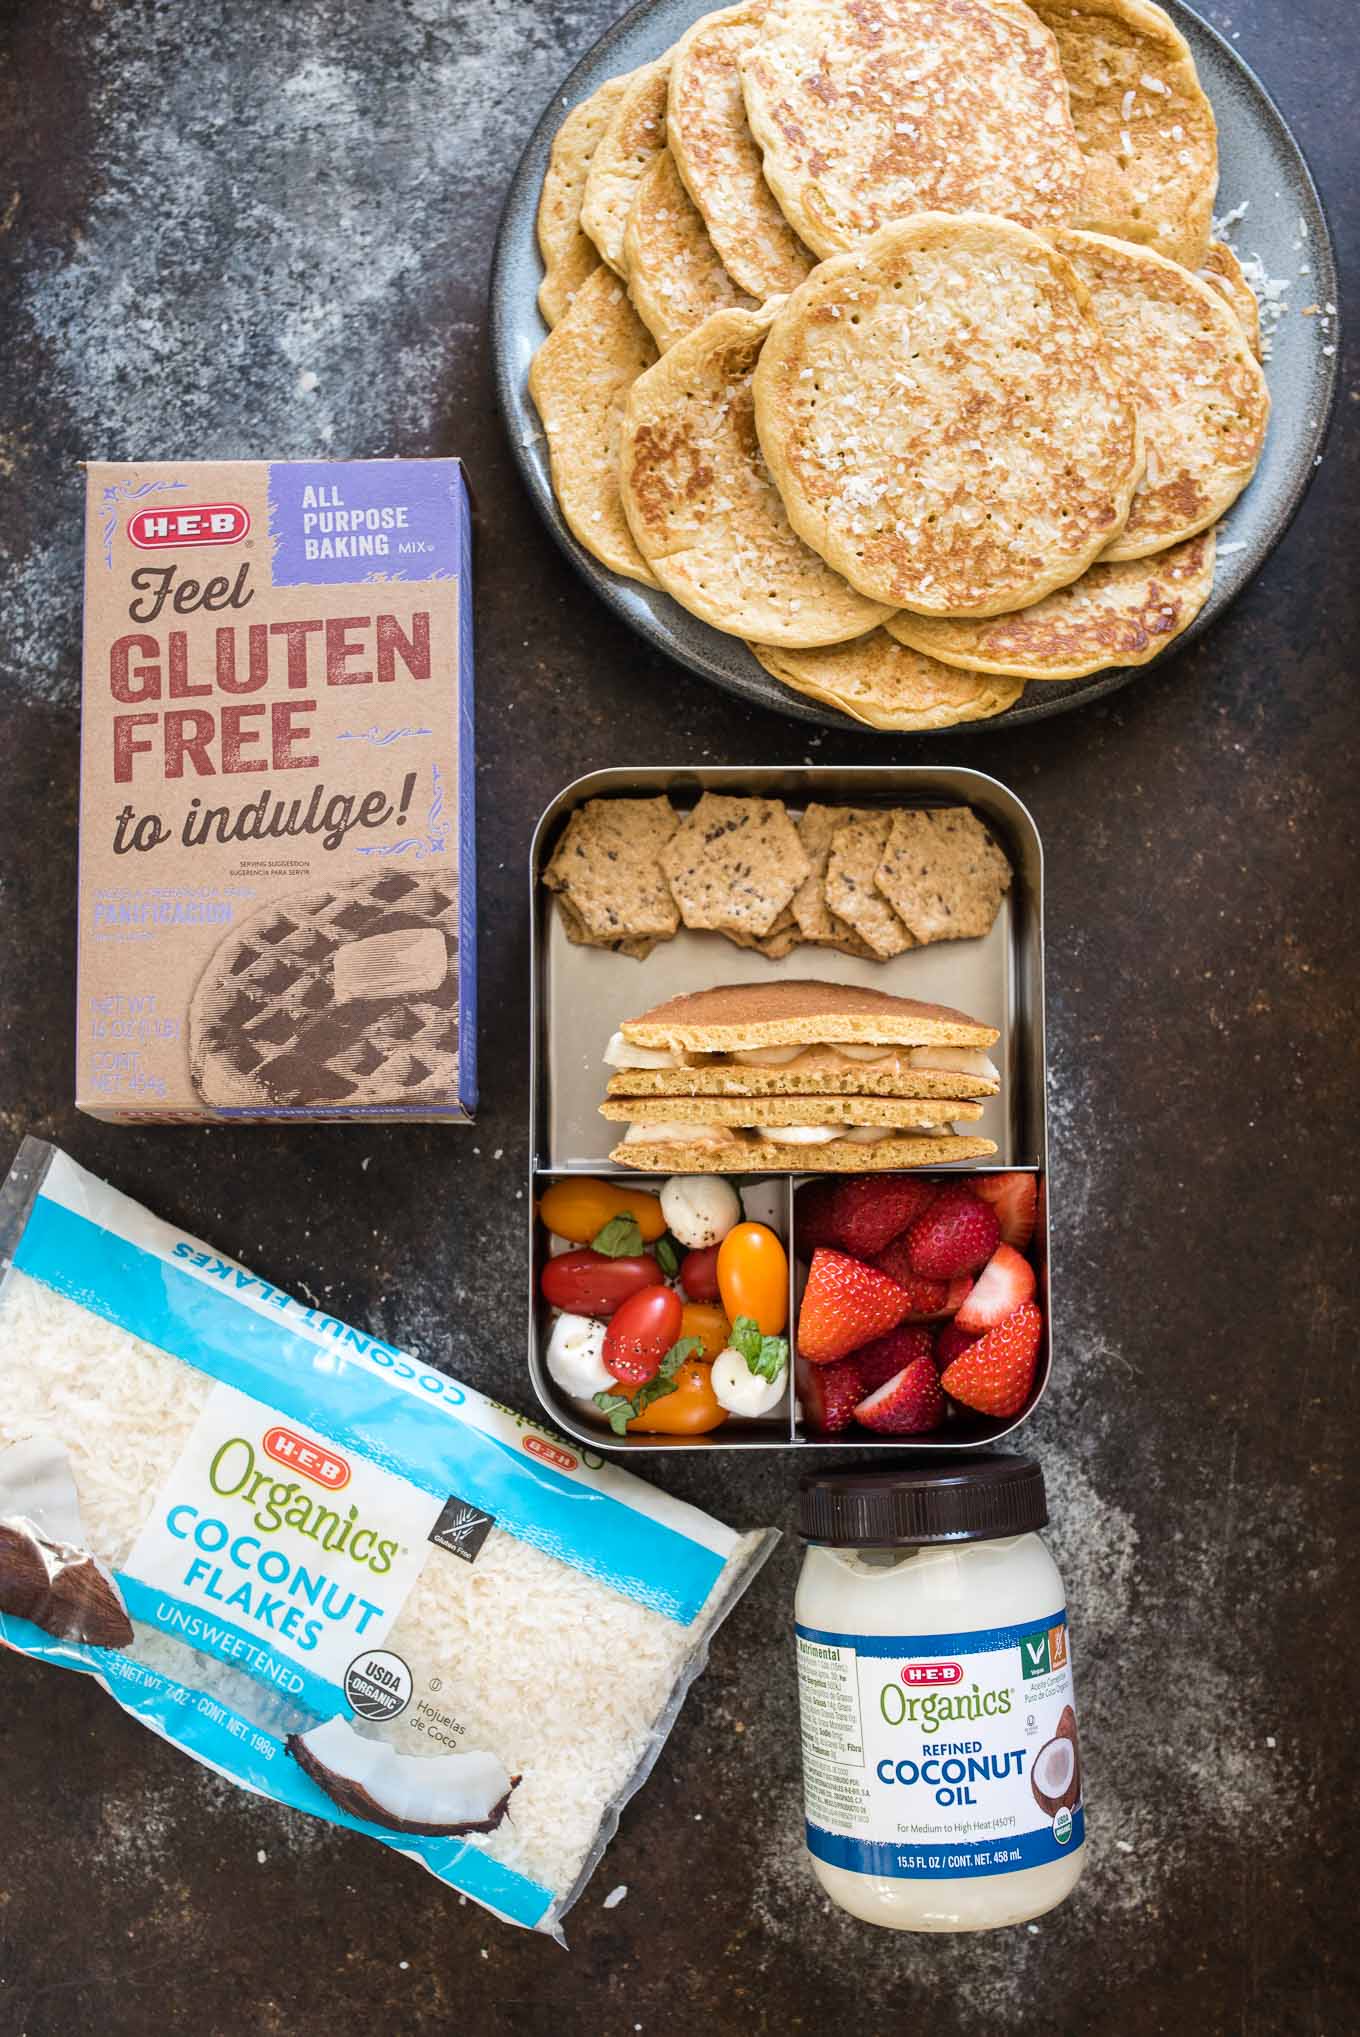 Kids' Bento Box - Corn Cake Pancakes & Yogurt